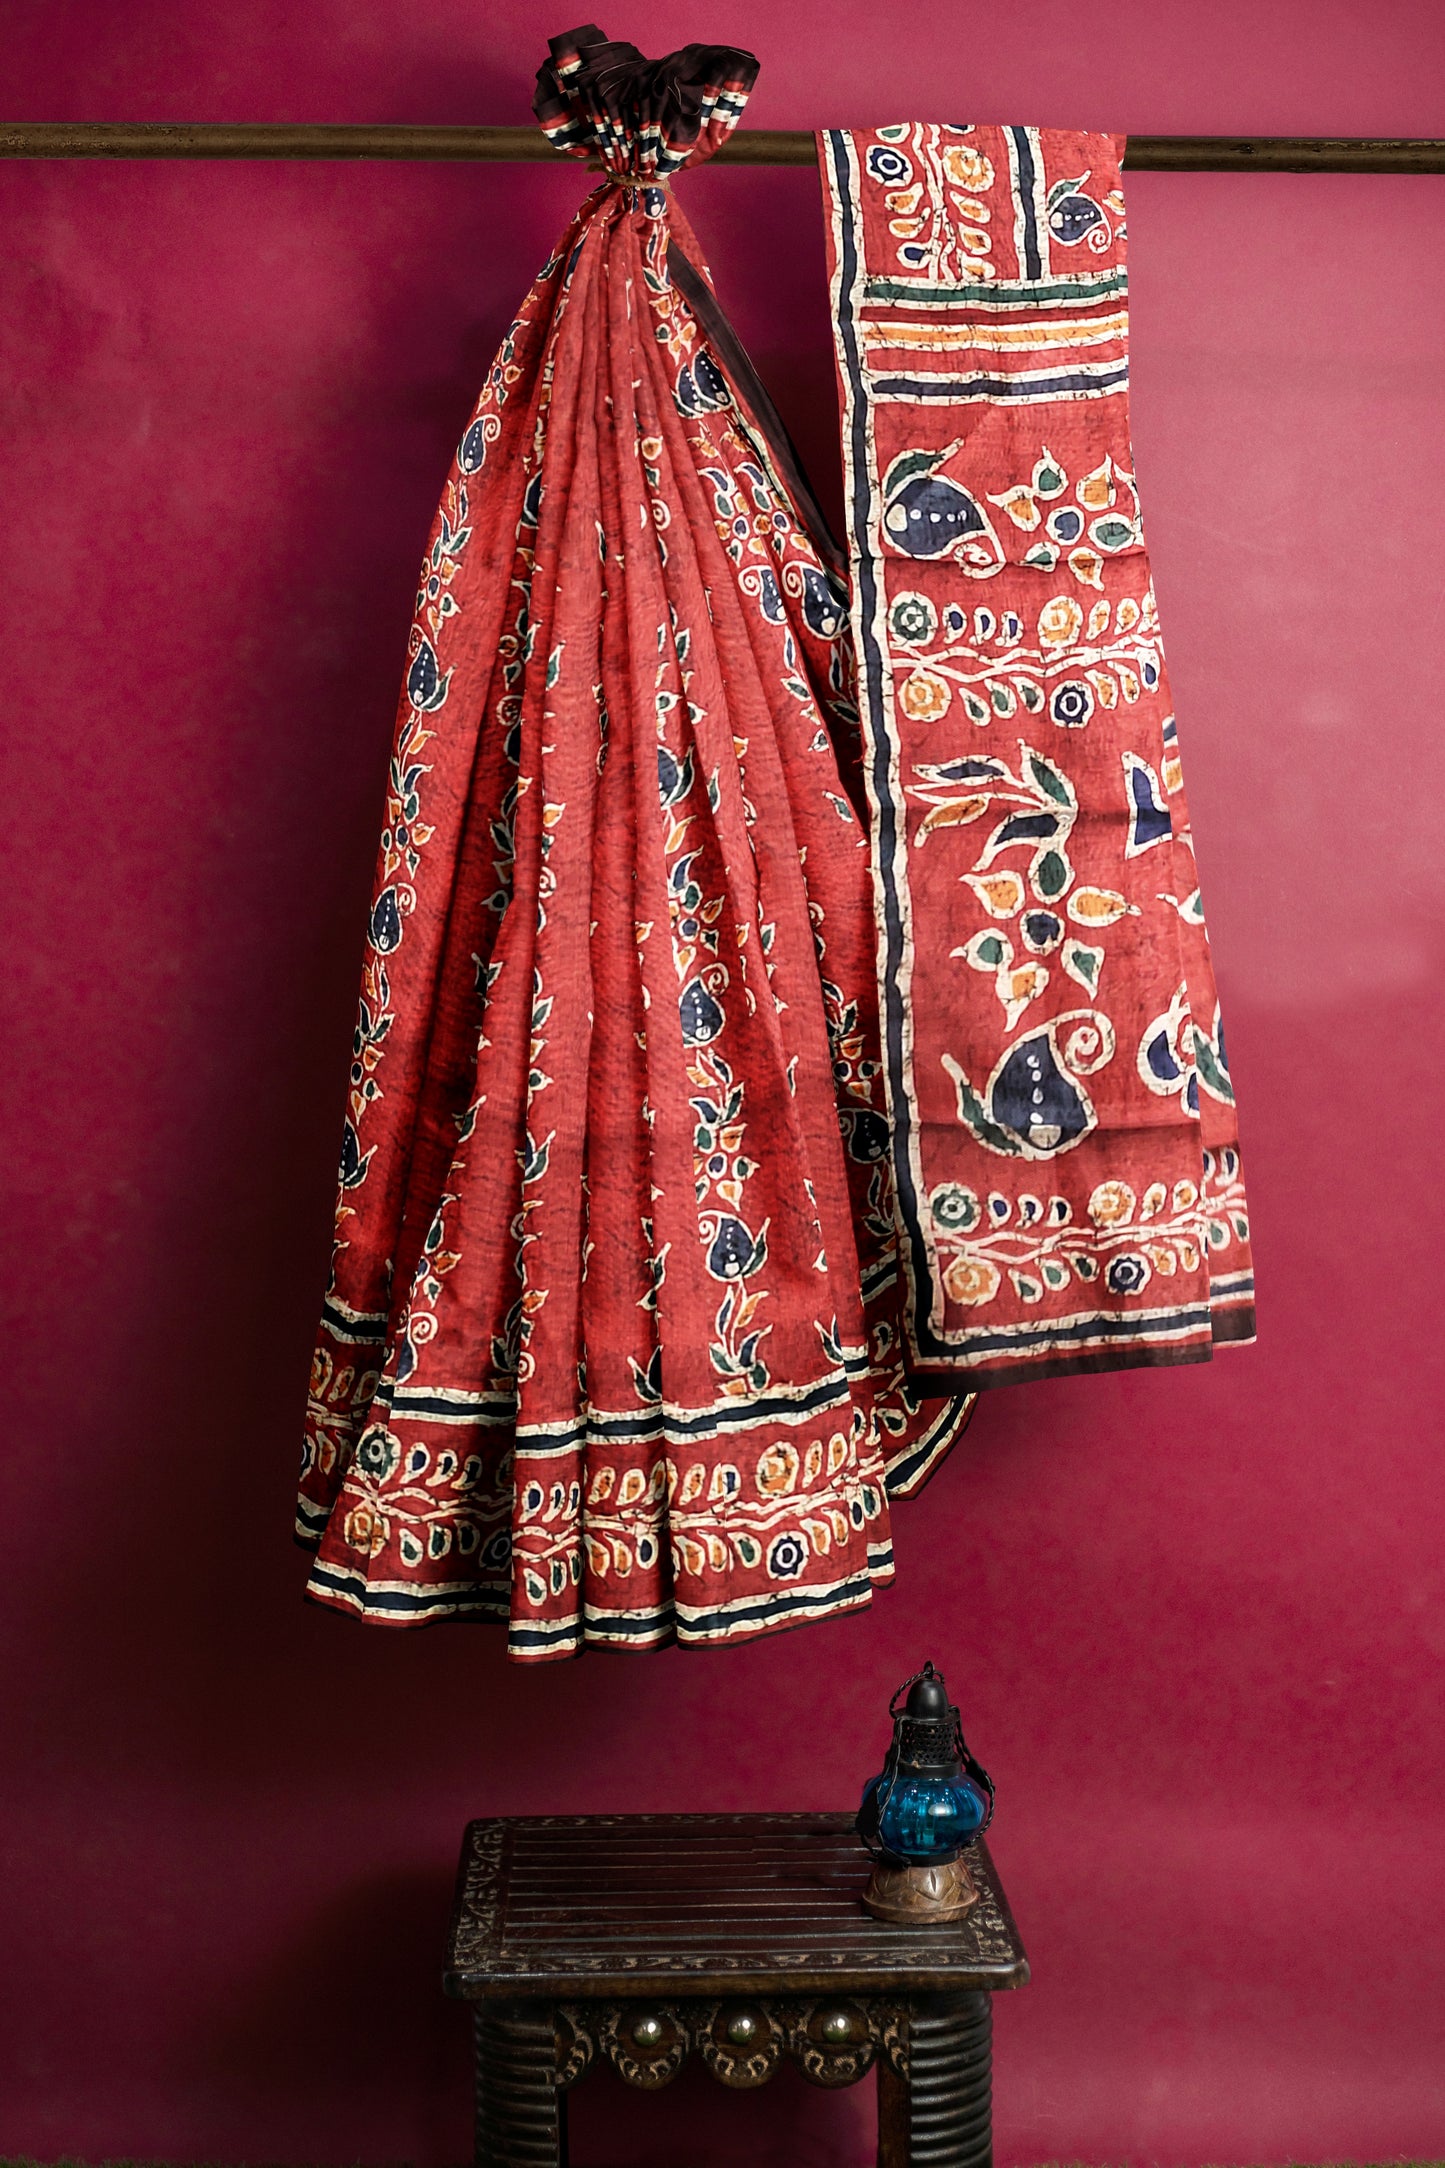 Southloom Red Cotton Chanderi Printed Designer Saree